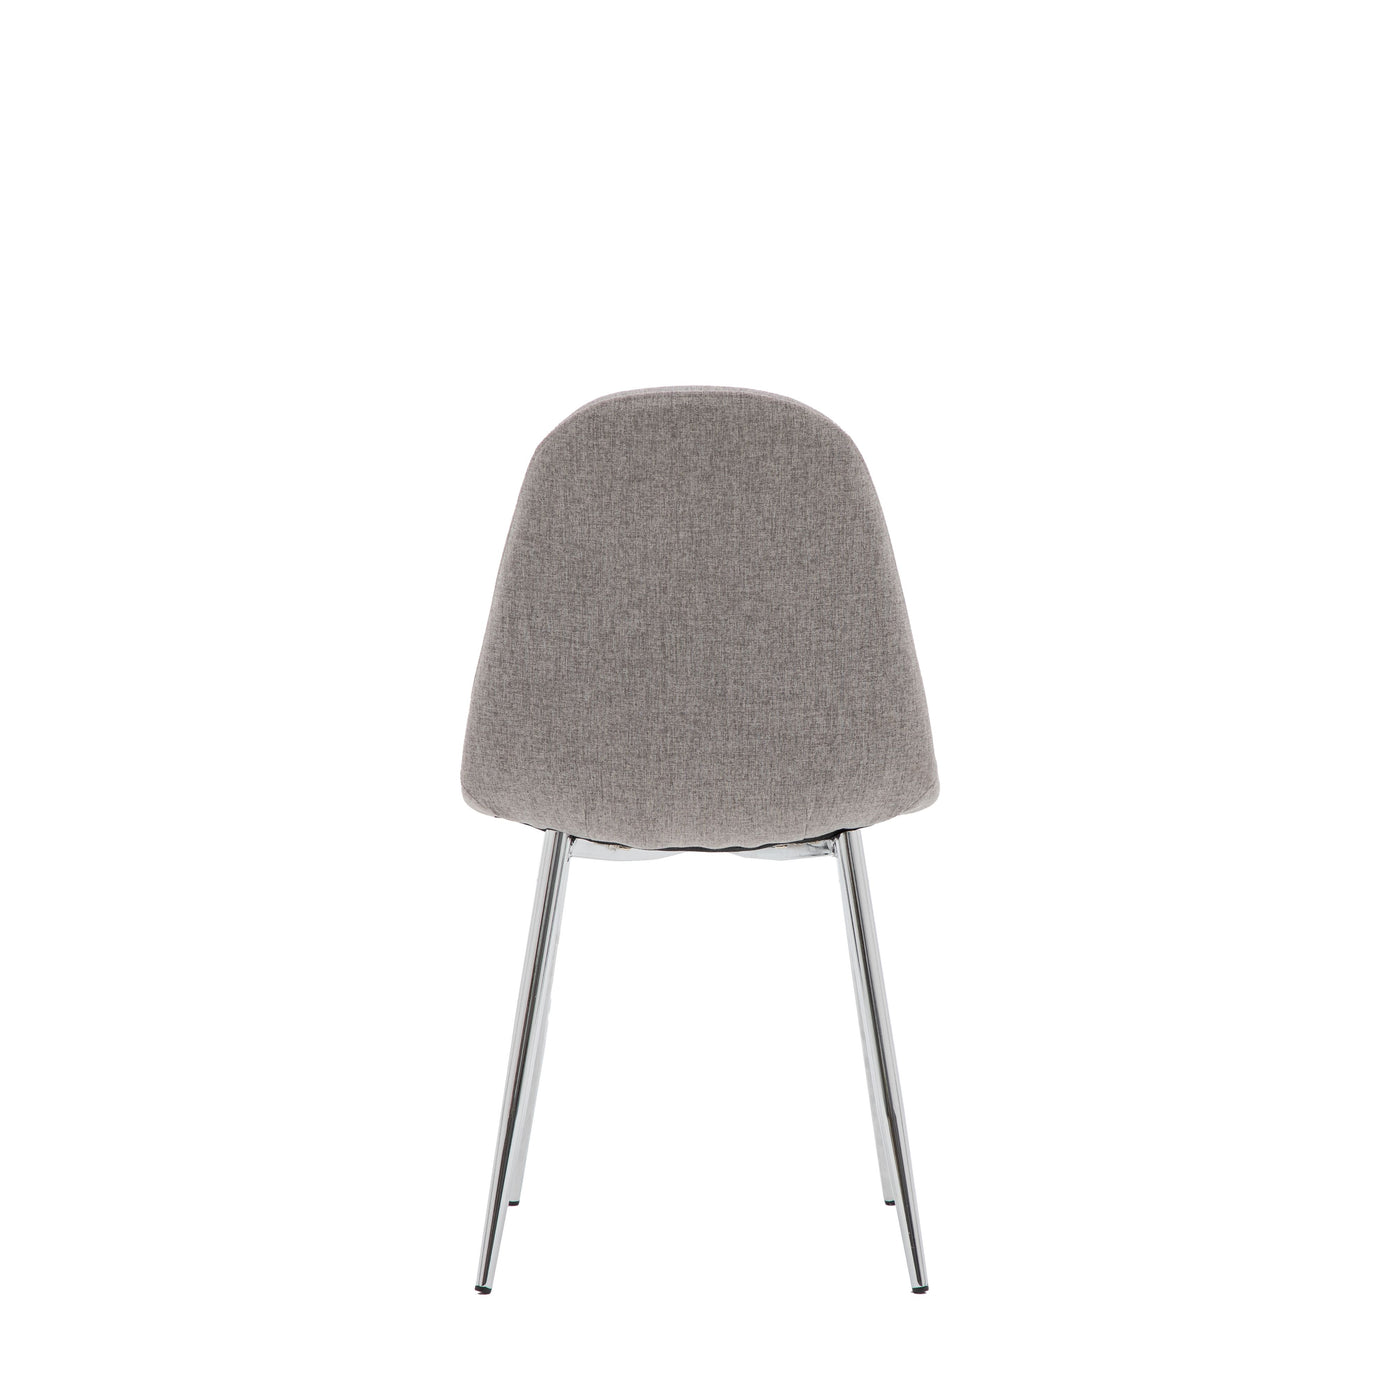 Ditcheat Dining Chair 2pk - Chrome/Grey